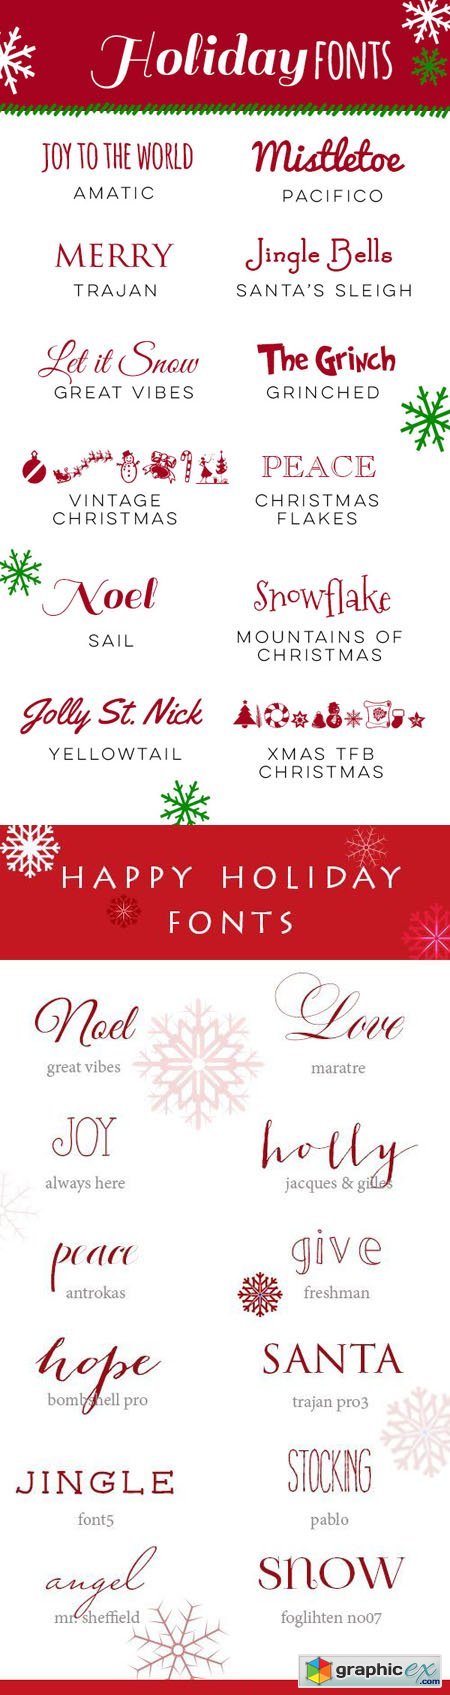 24 Happy Holiday Fonts